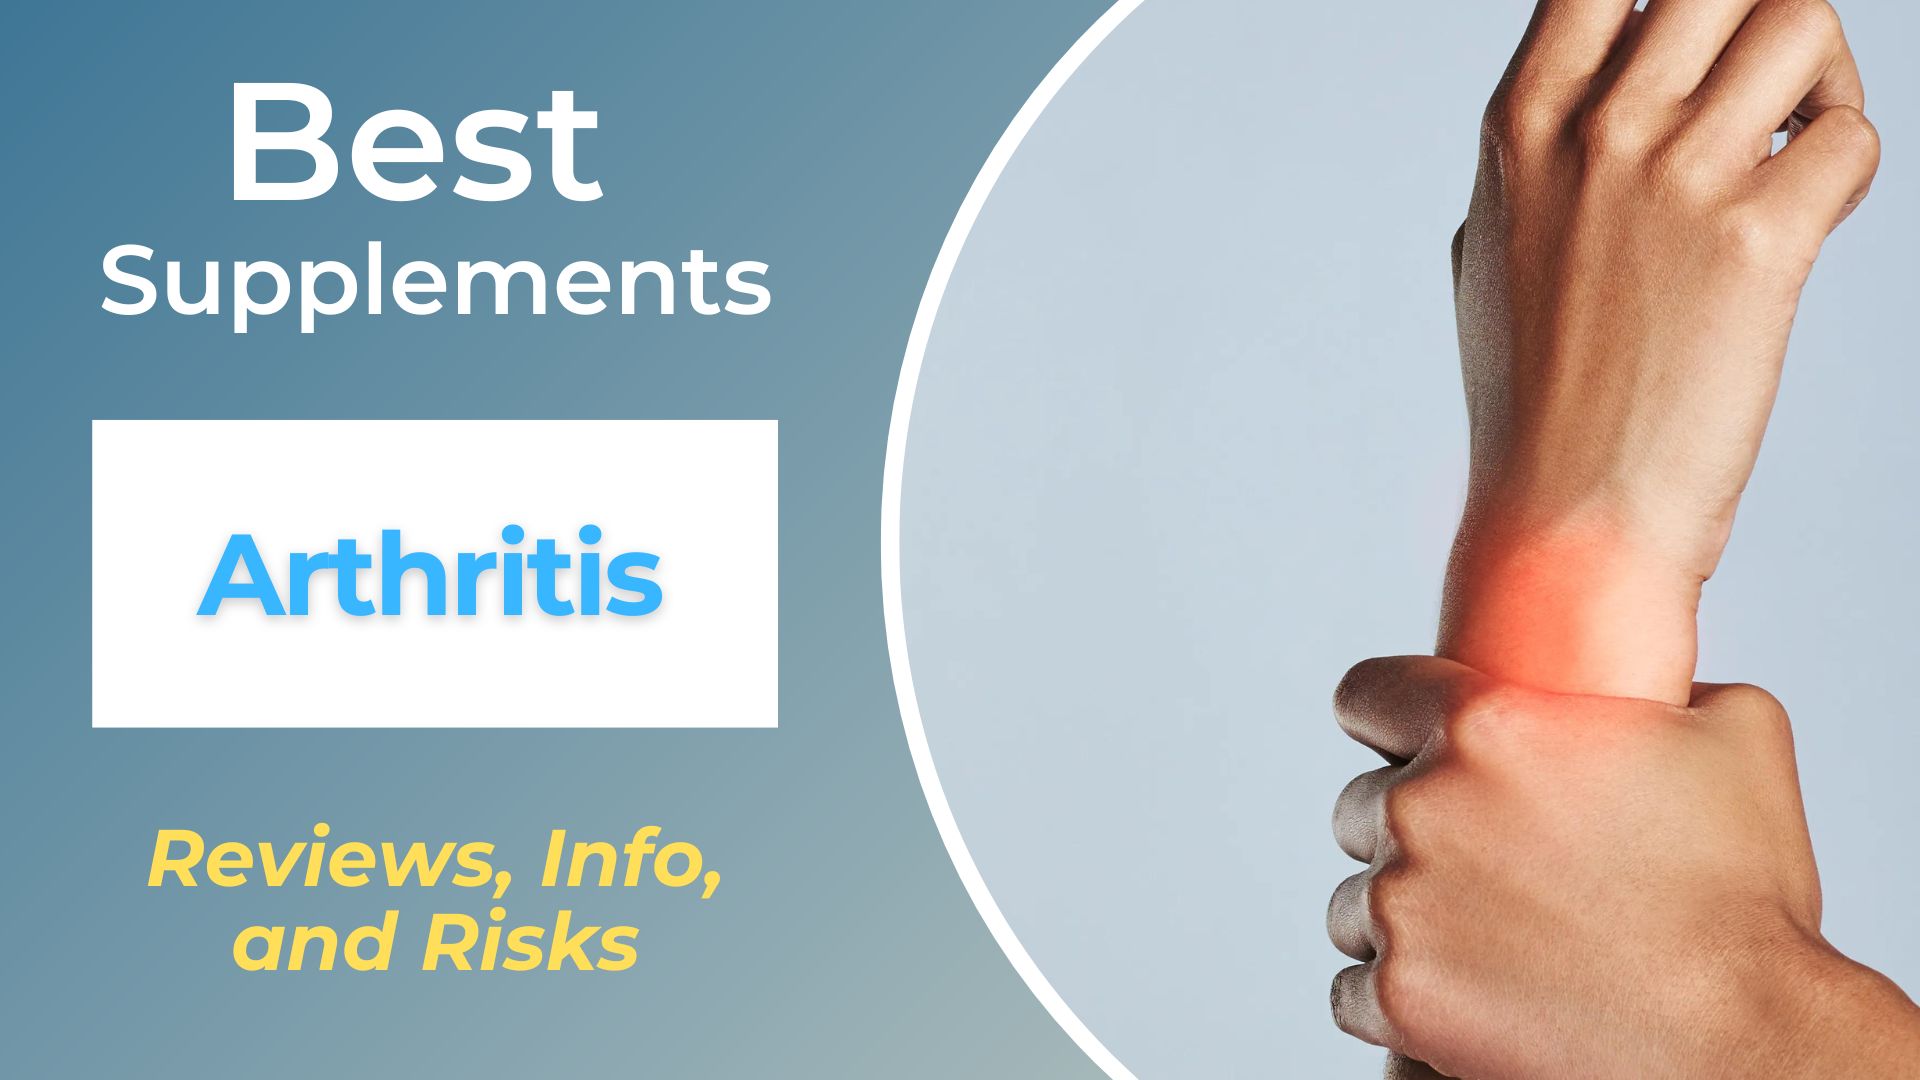 Best Supplements for Arthritis